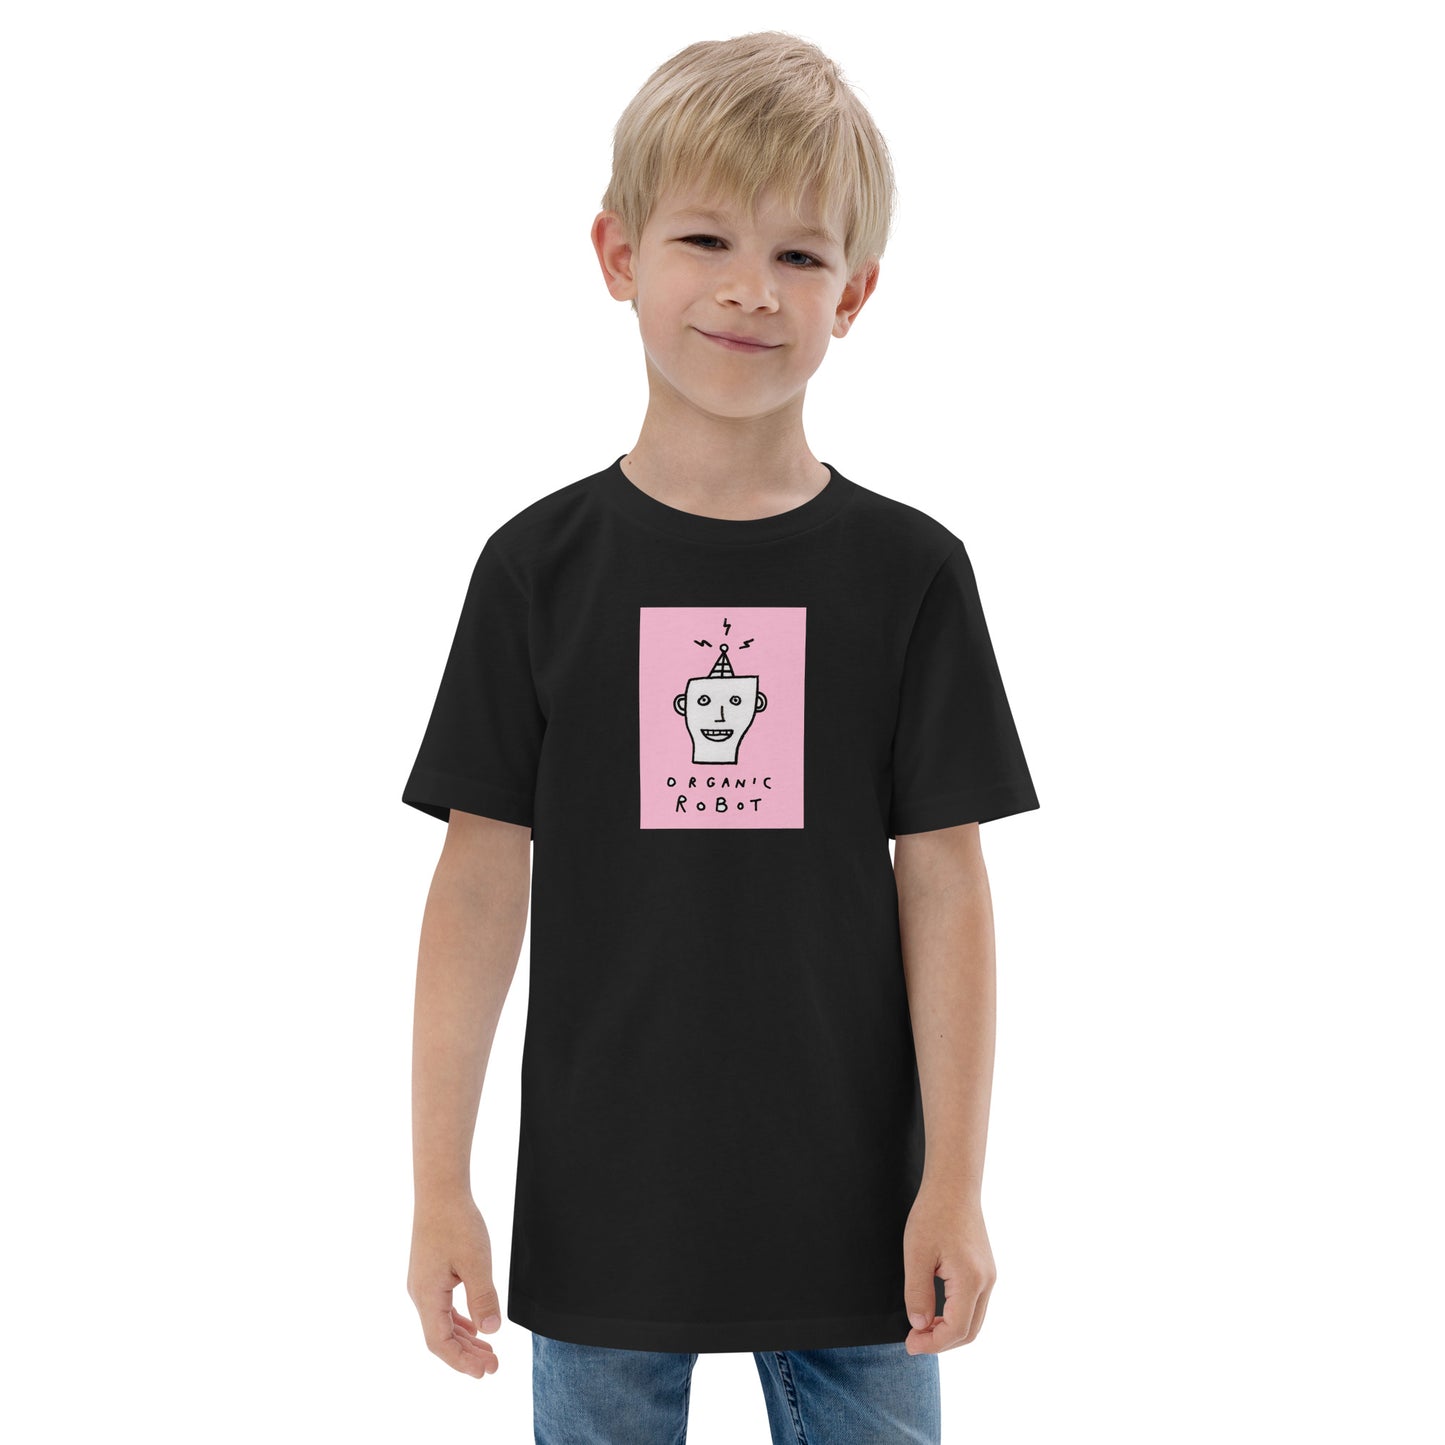 Organic Robot, Pink - Youth jersey t-shirt